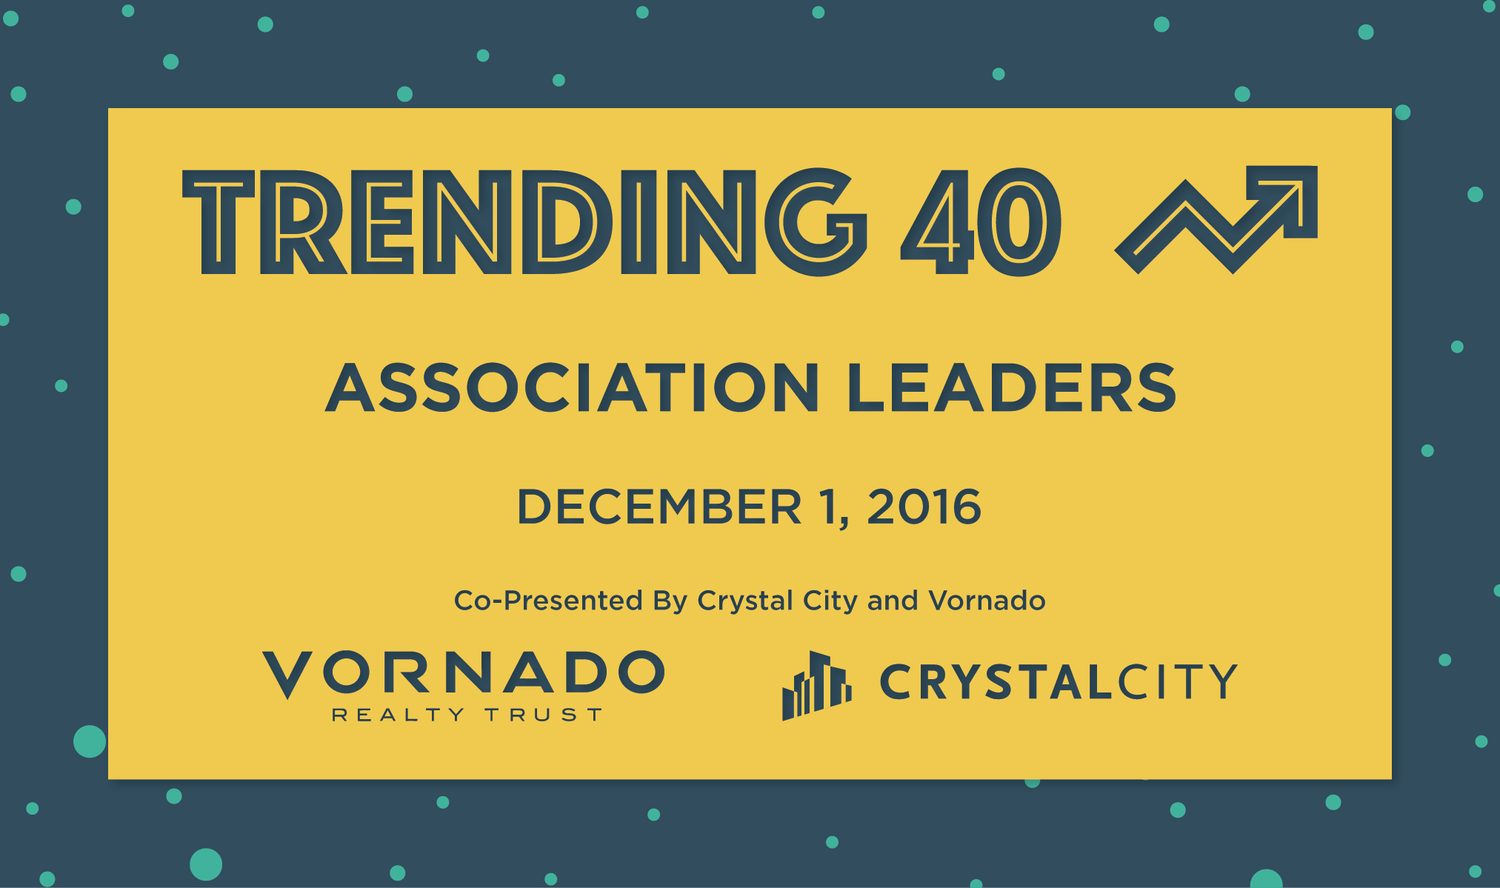 Trending 40 Association Leaders